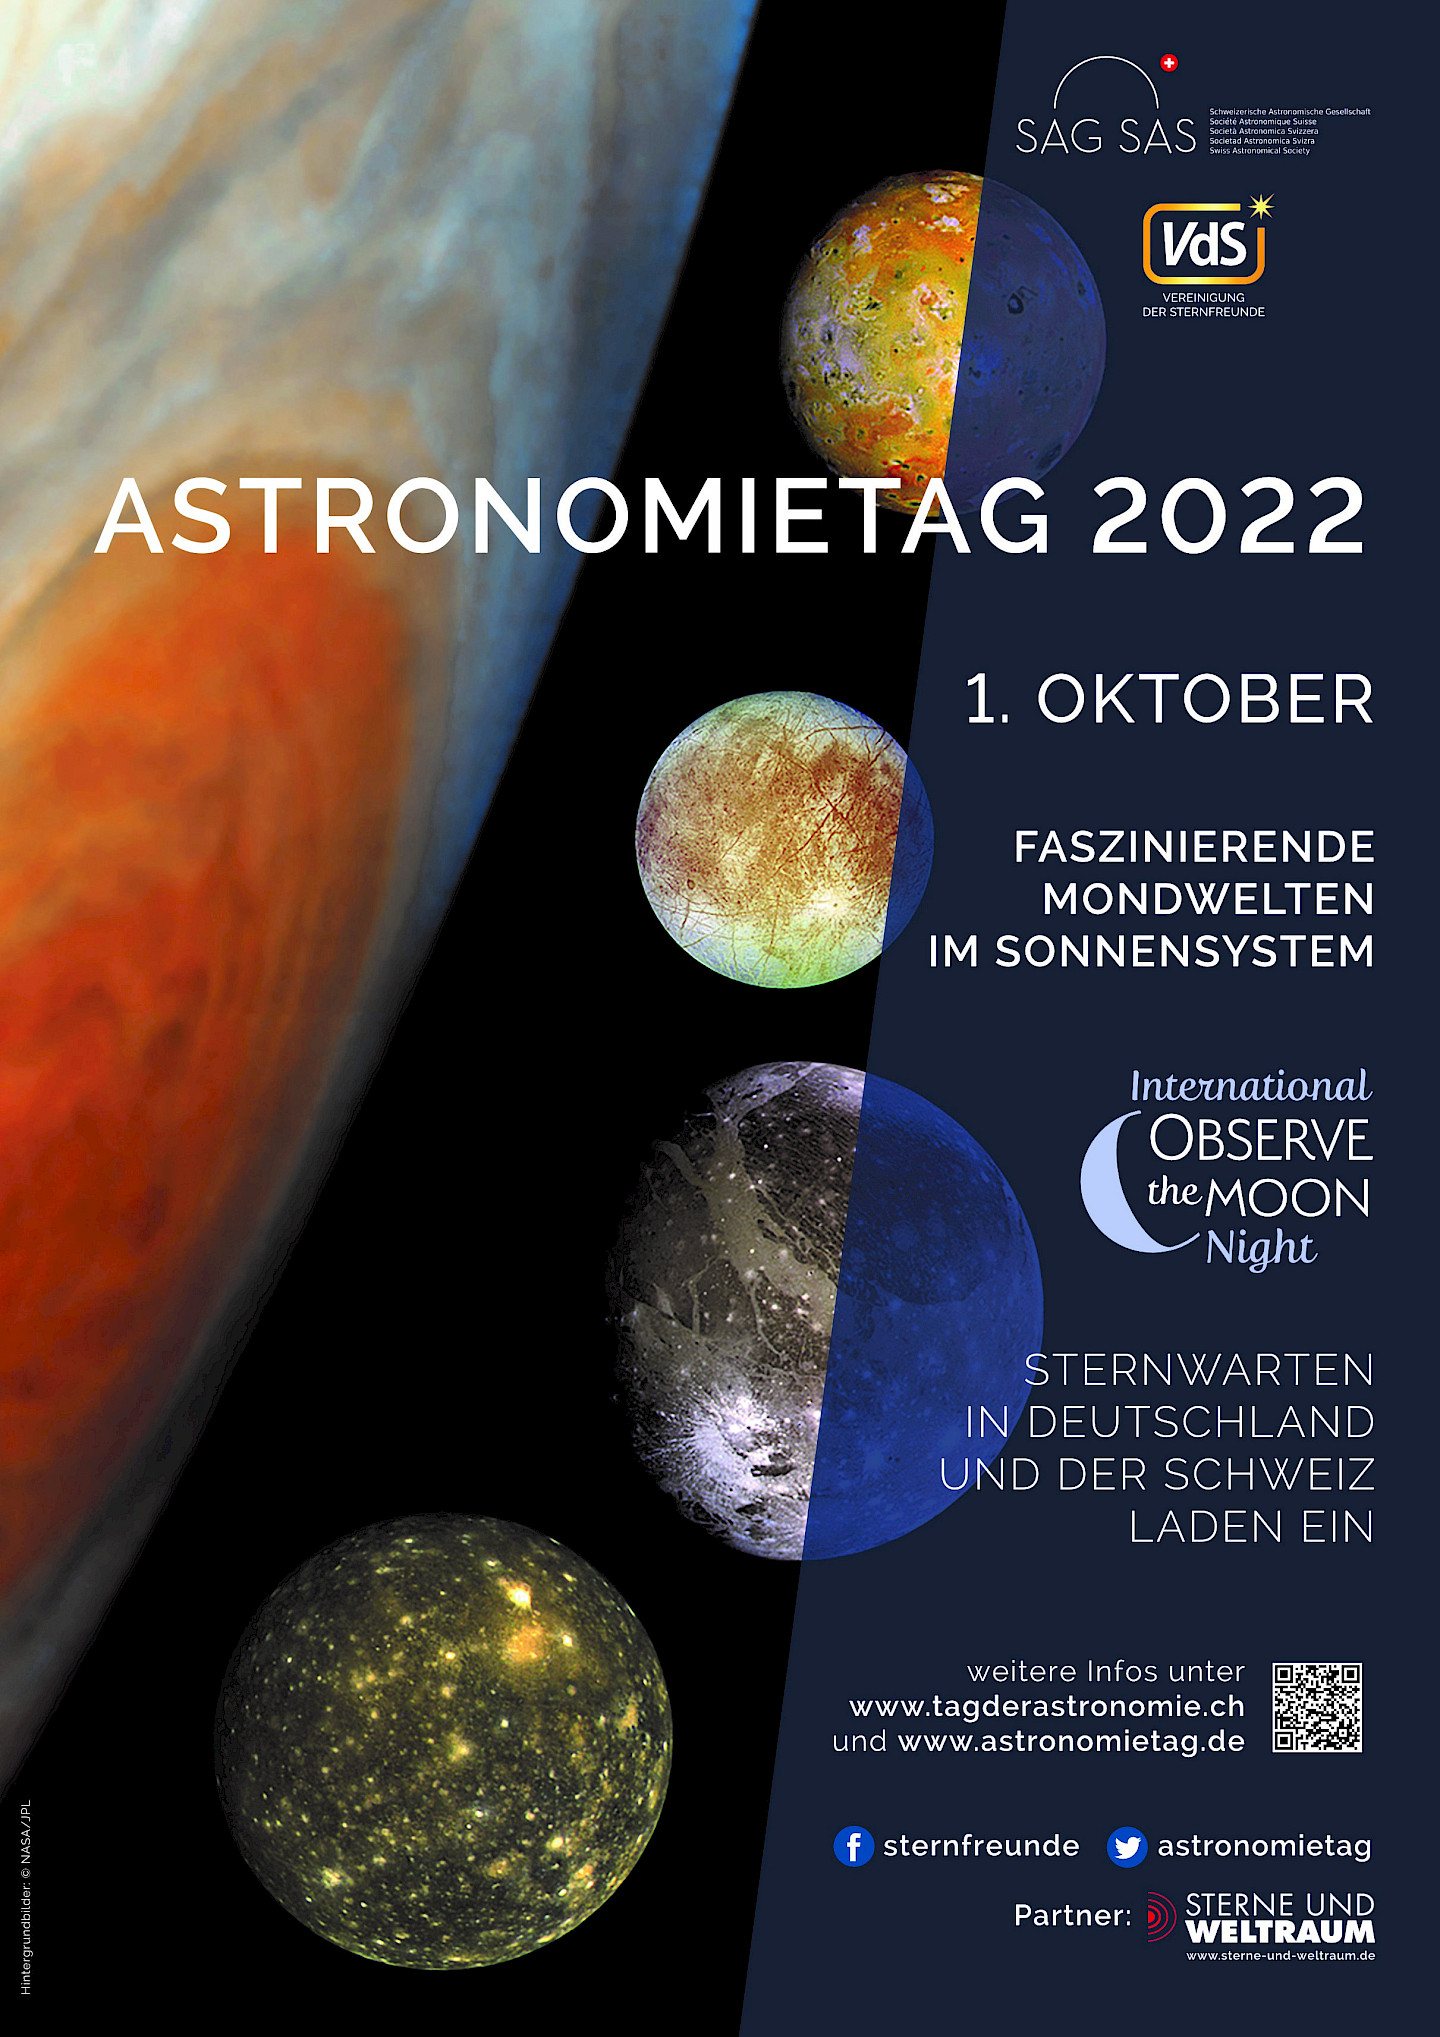 Astronomie Tag 2022